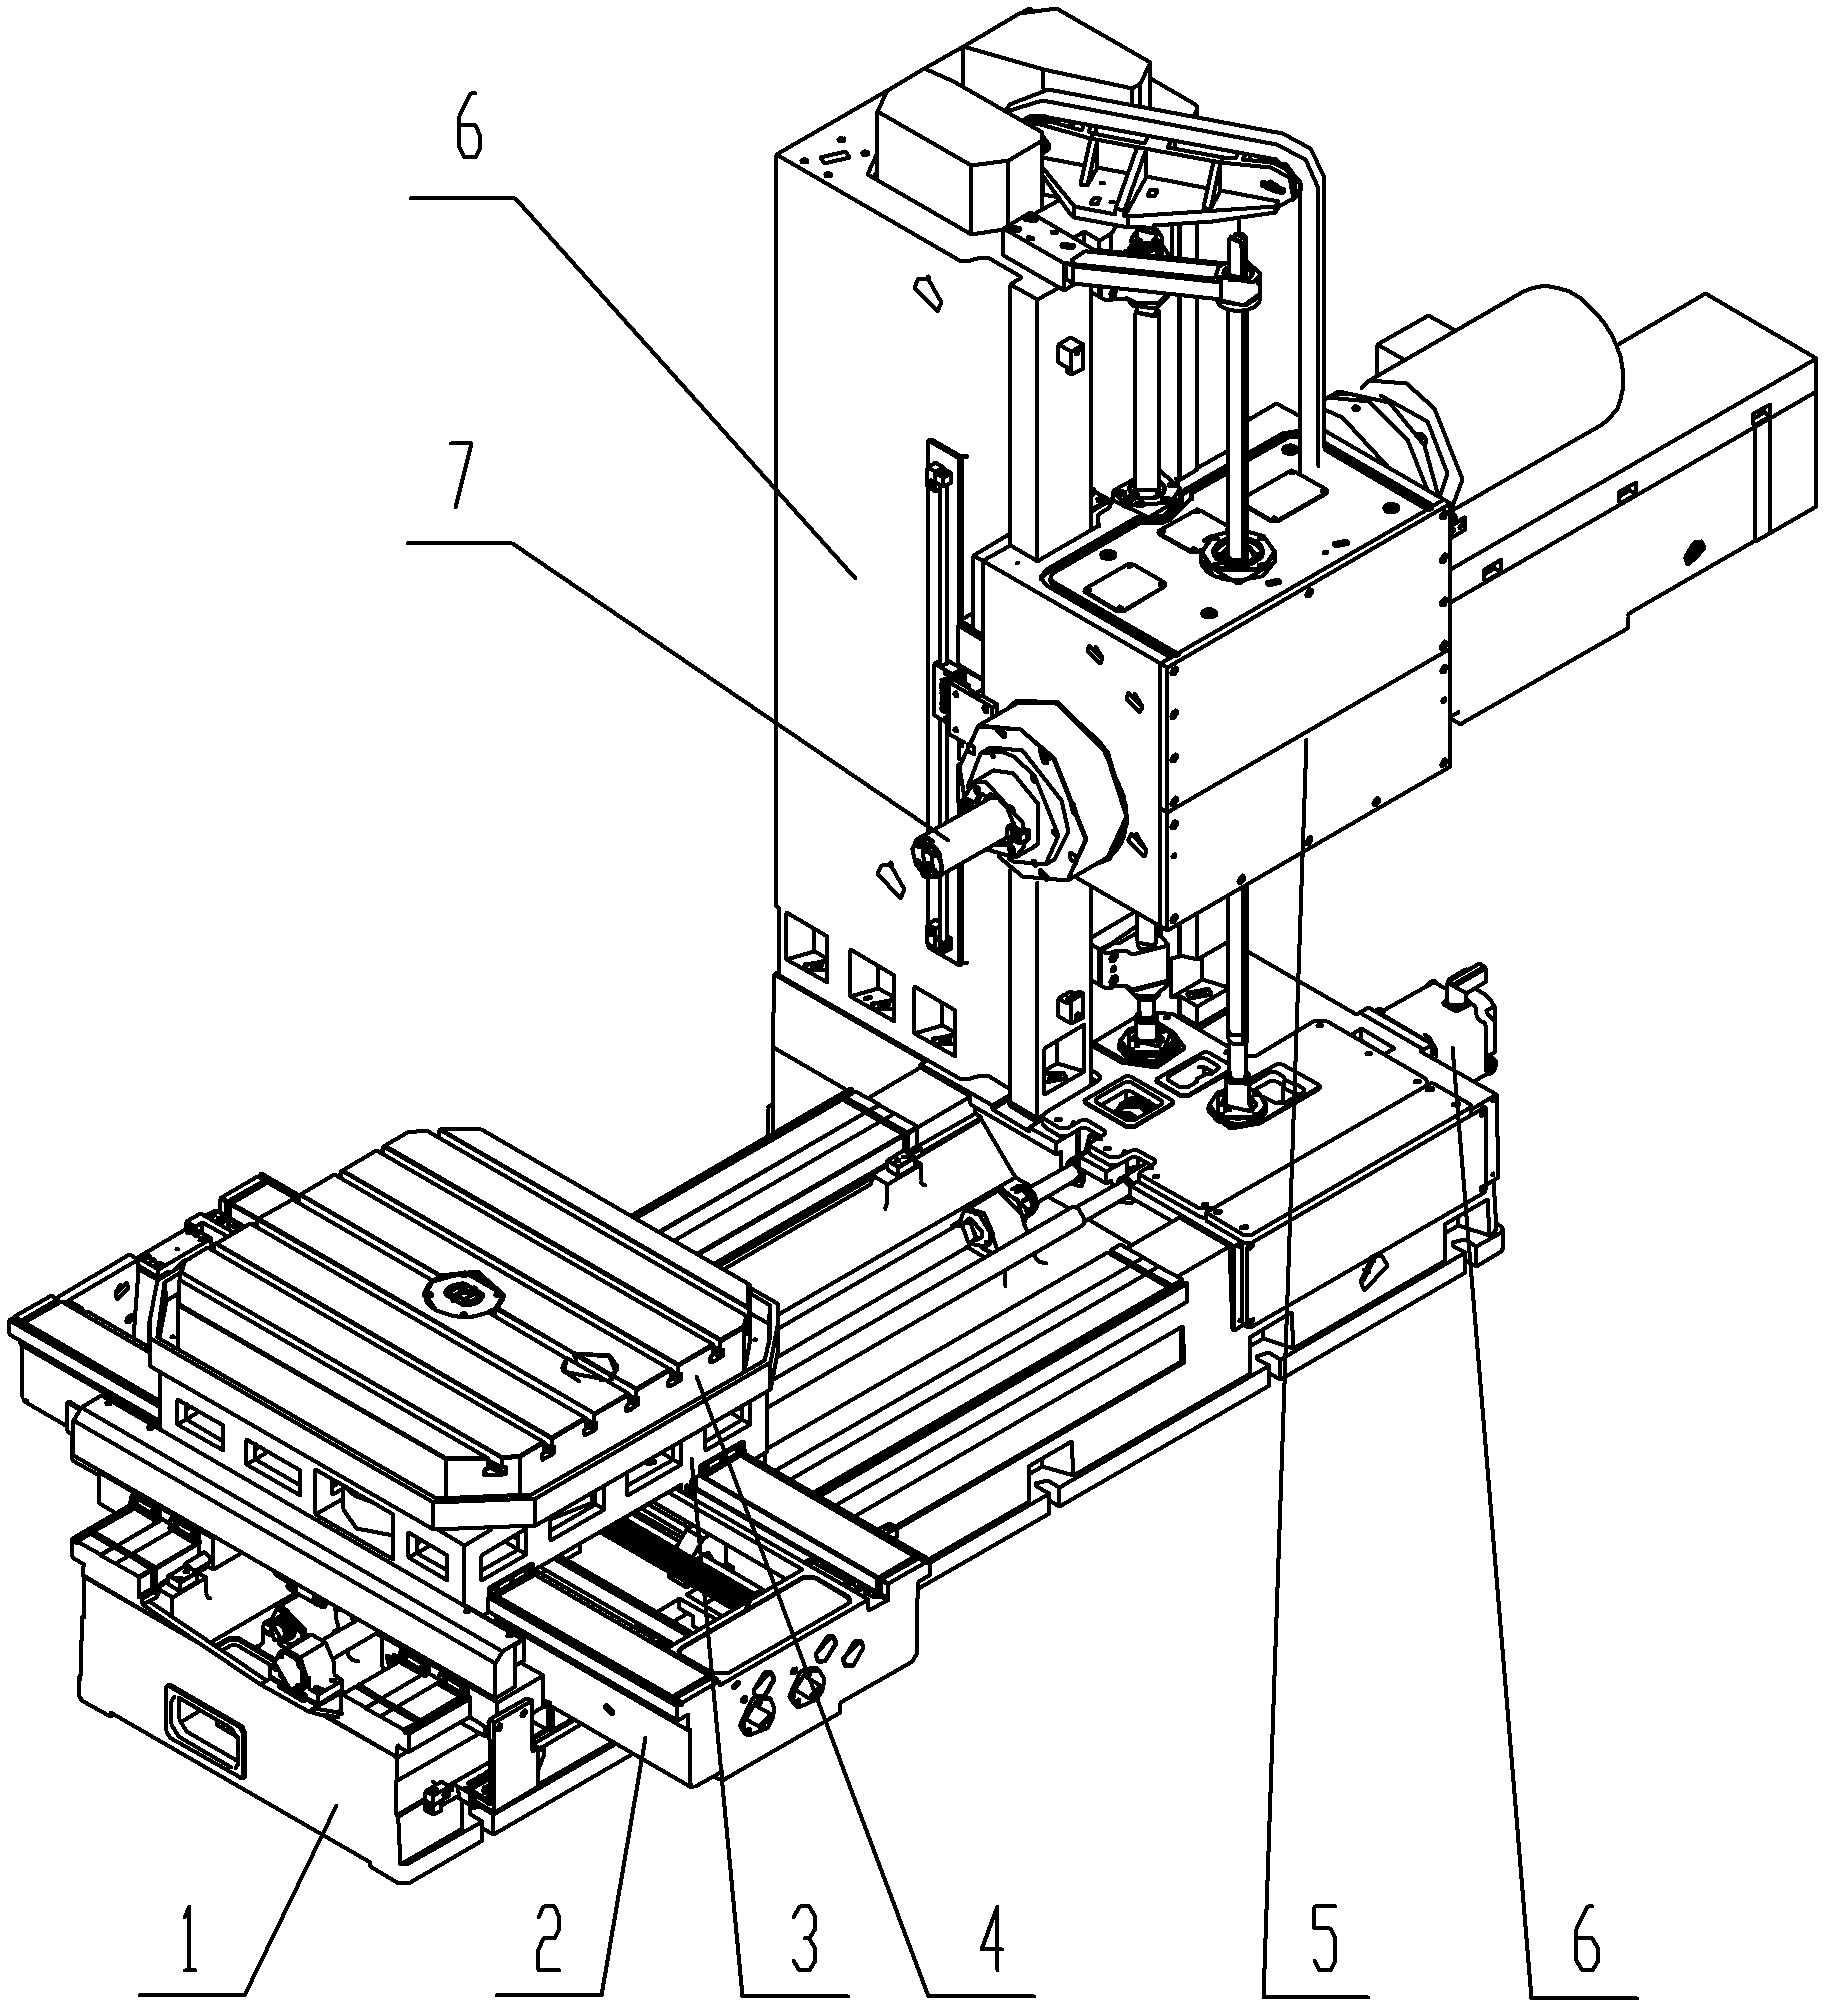 Automatic horizontal boring and milling machine